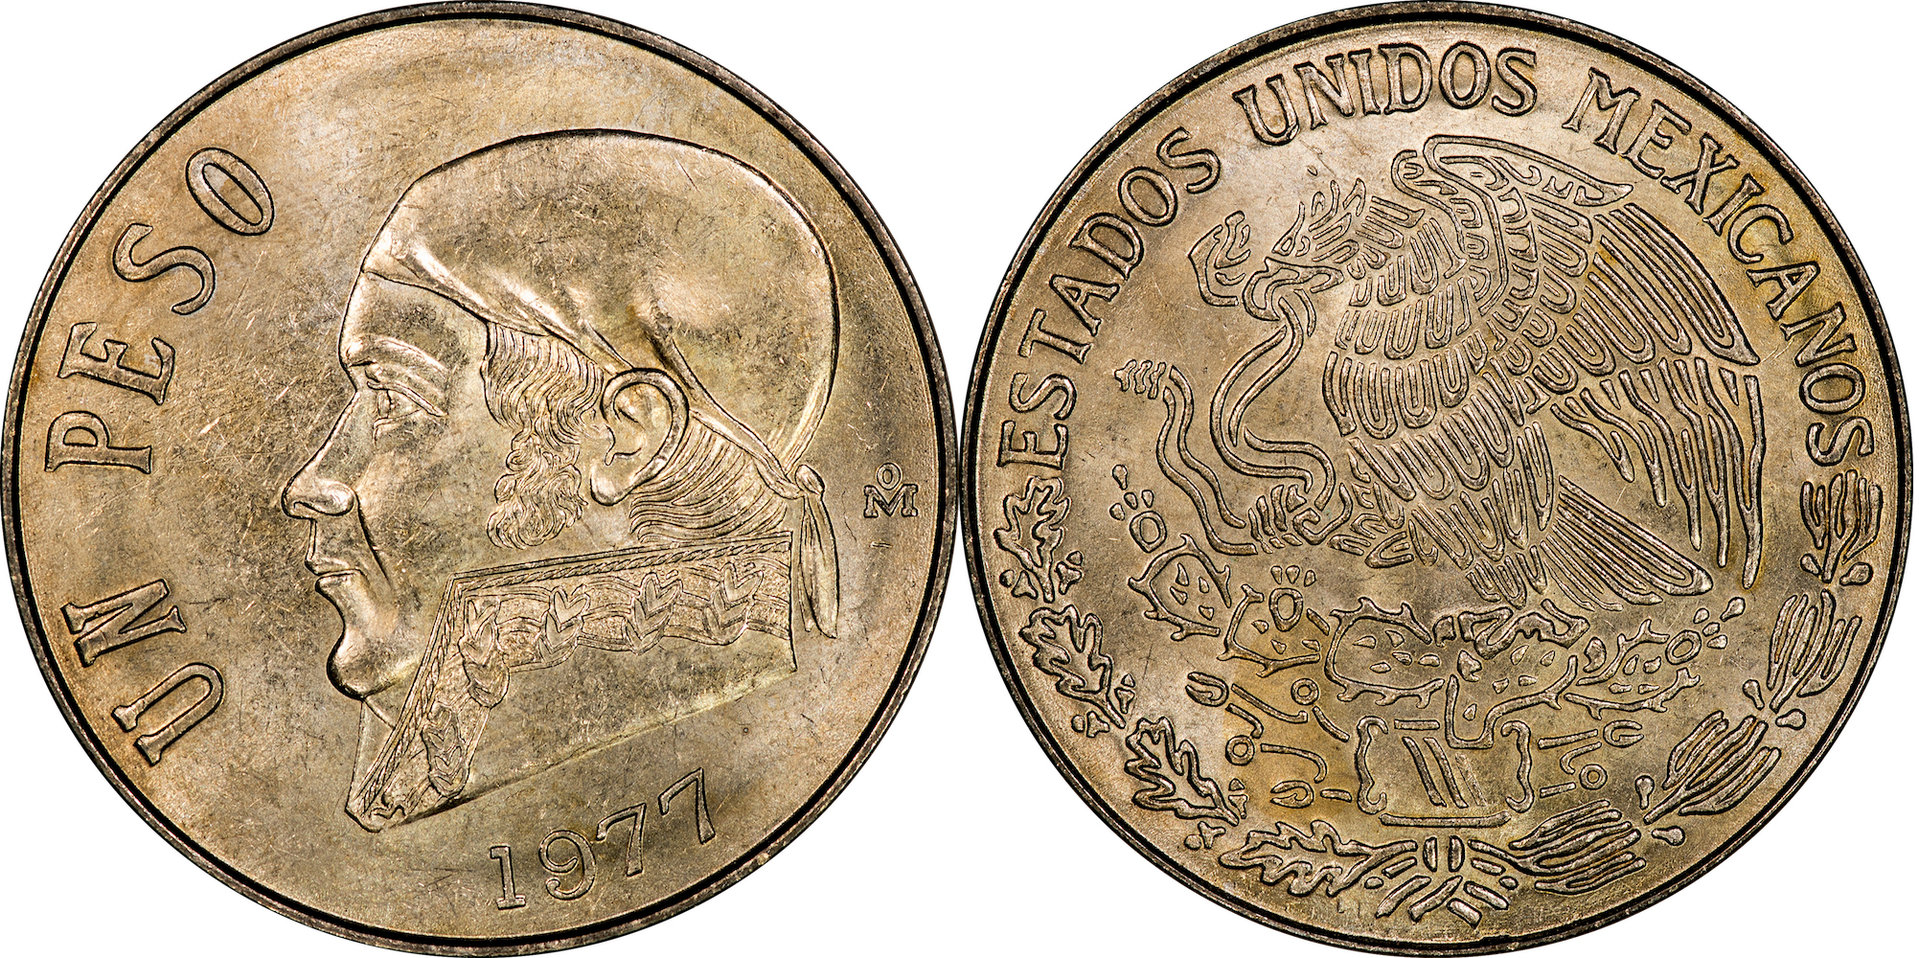 Mexico - 1977 (Thin Date) 1 Peso.jpg